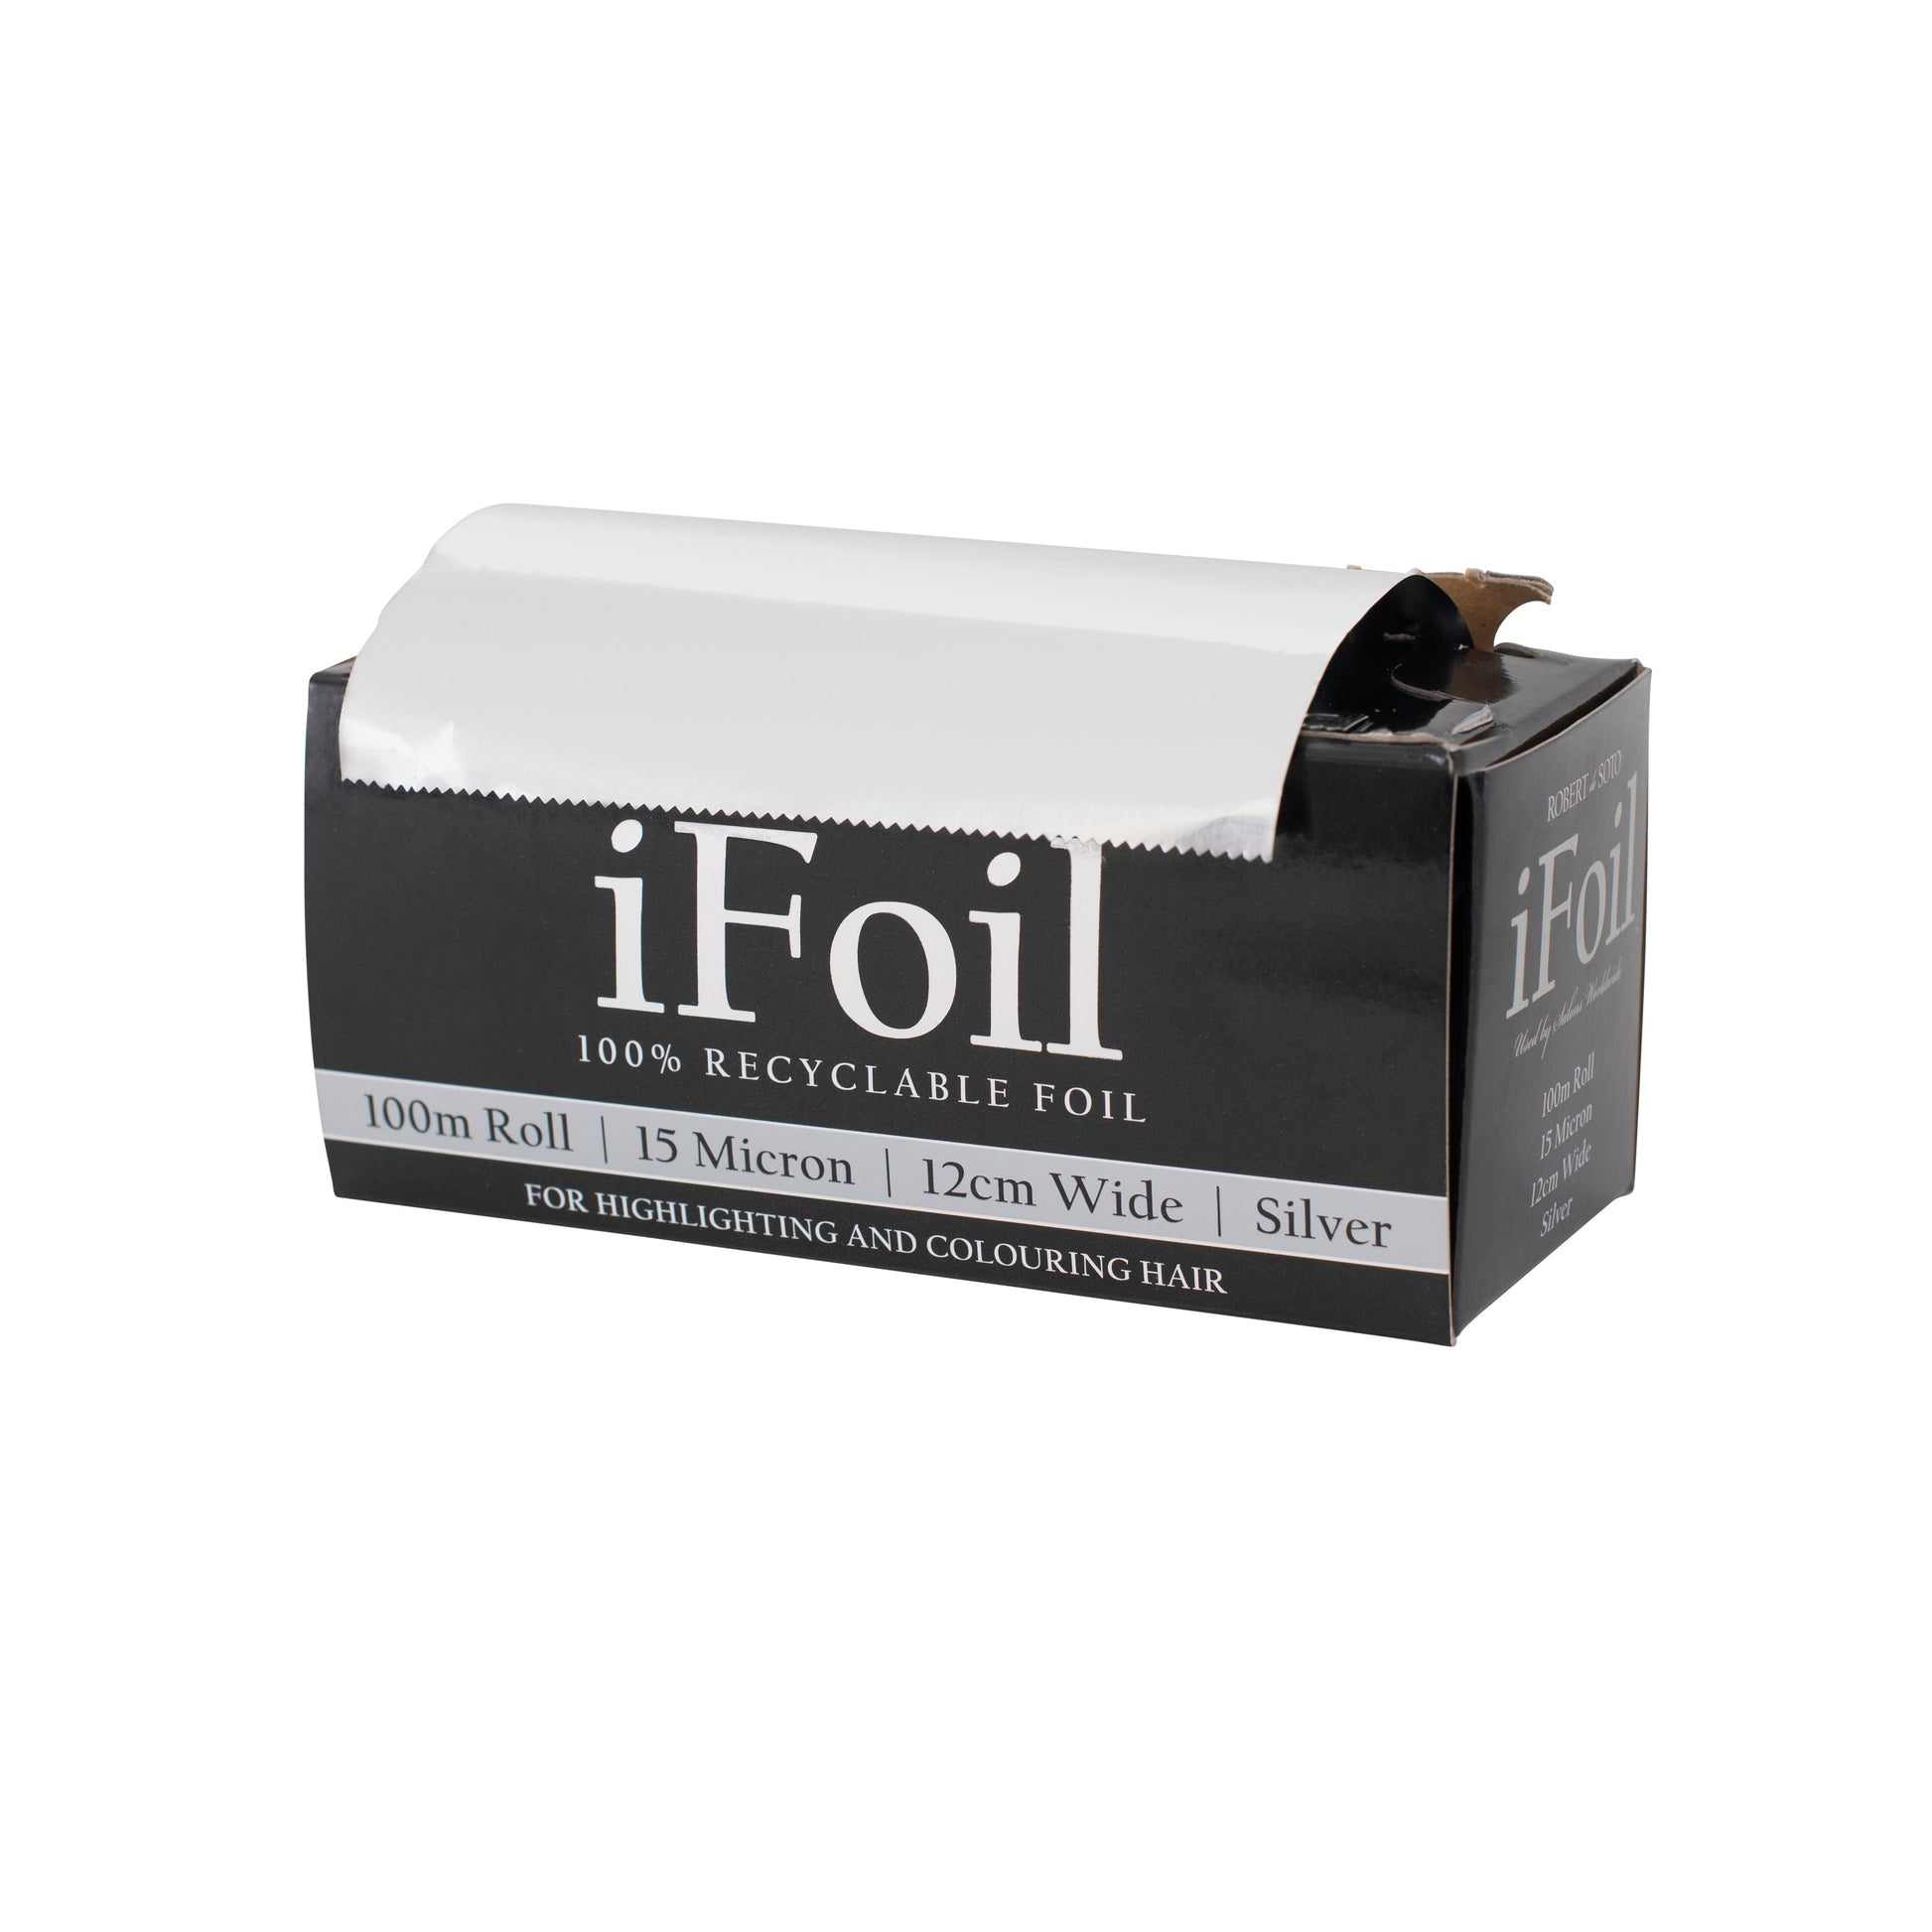 Robert Desoto Ifoil 15 Micron Foil 100m X 125mm - Silver